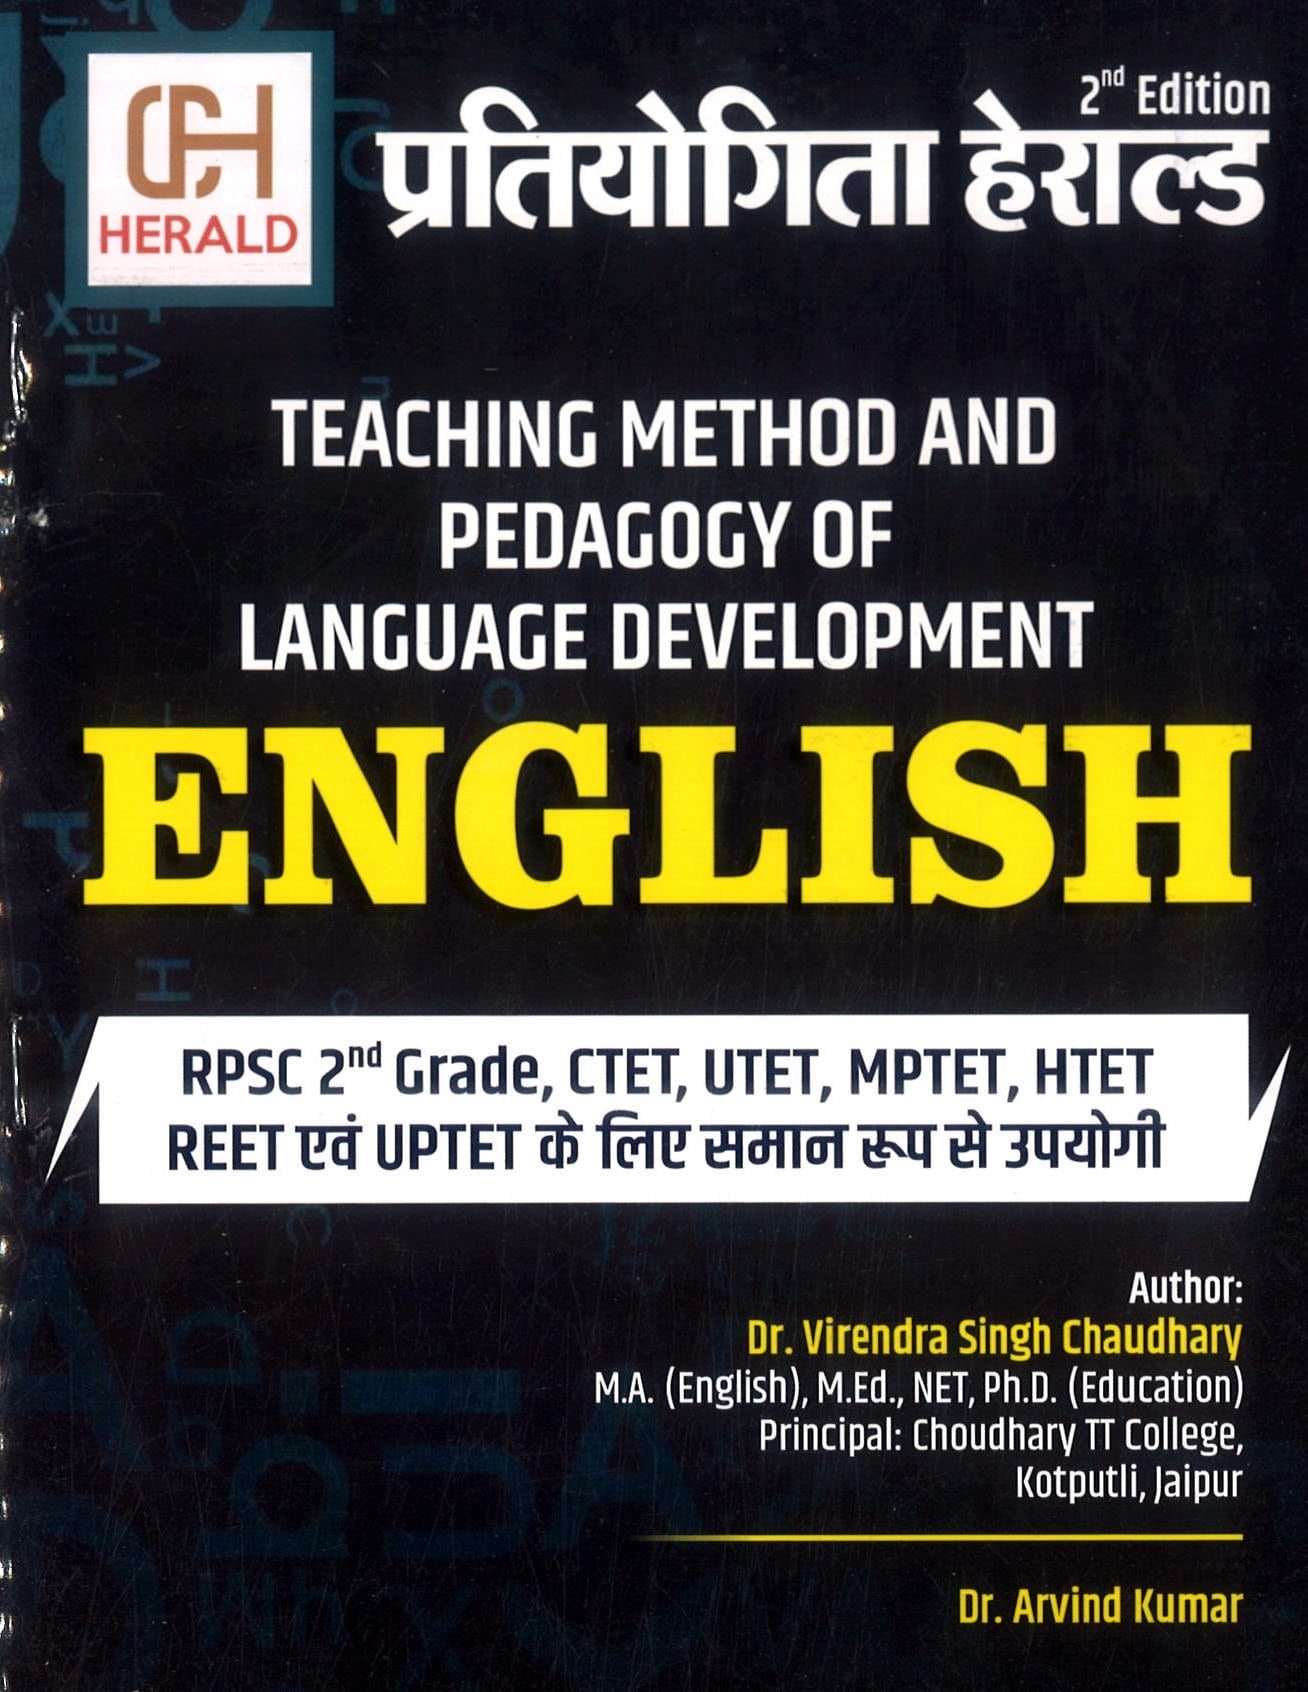 Winners English Pedagogy: Best English Teaching Methods Book for RPSC 2nd  Grade and REET Mains 